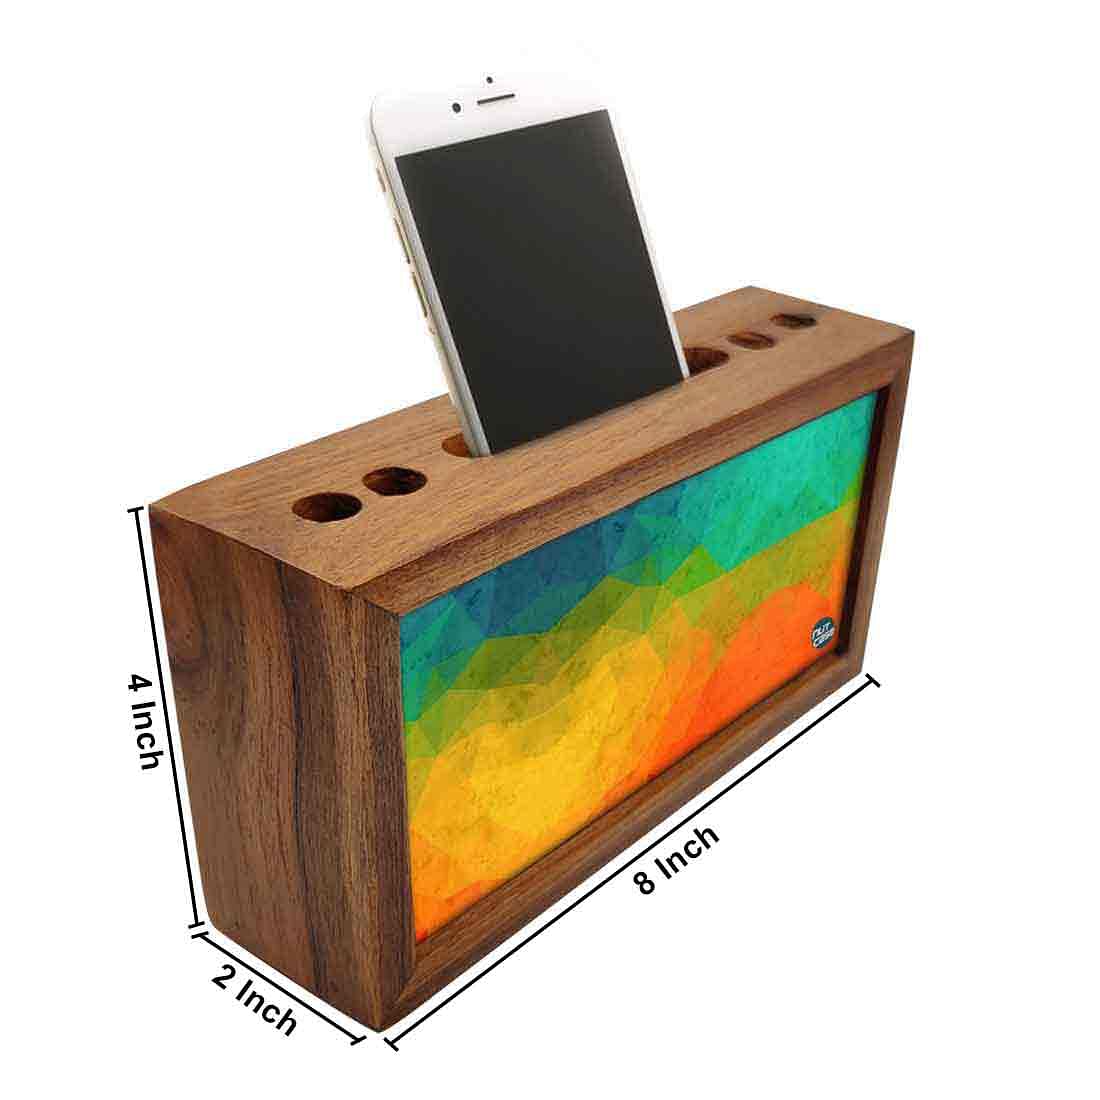 Wooden desk caddy Pen Mobile Stand - Multicolor Nutcase